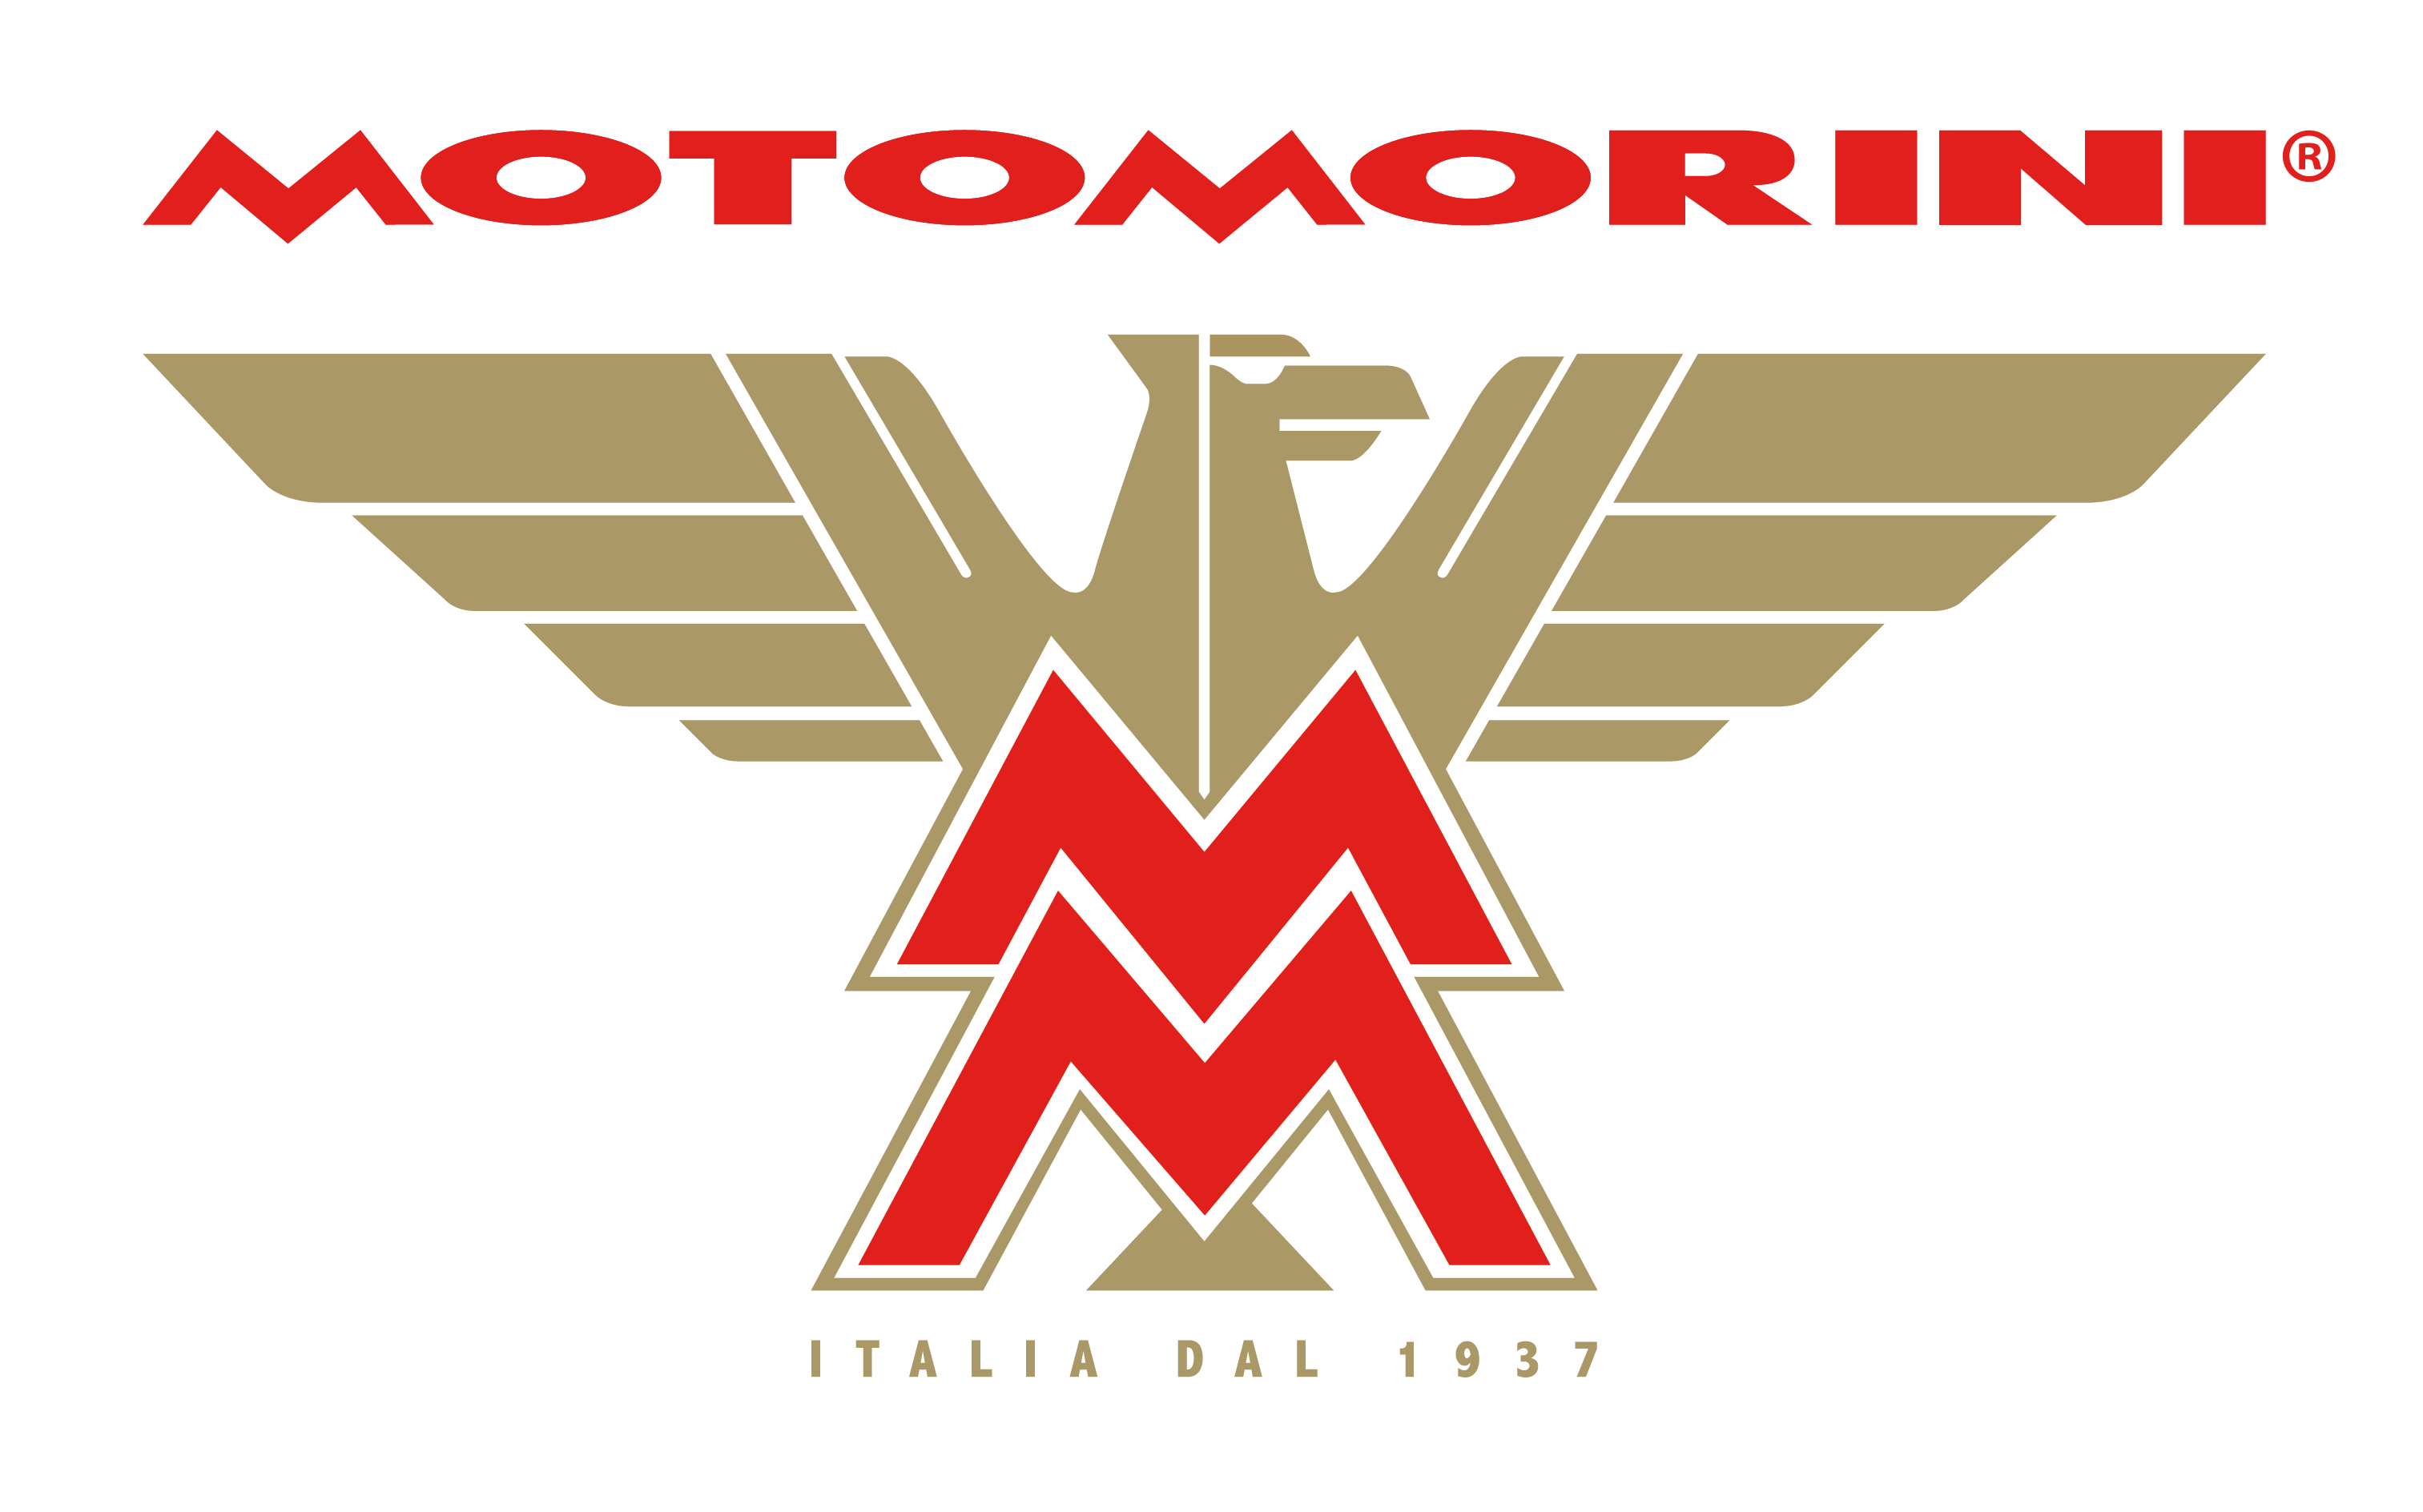 Motomorini